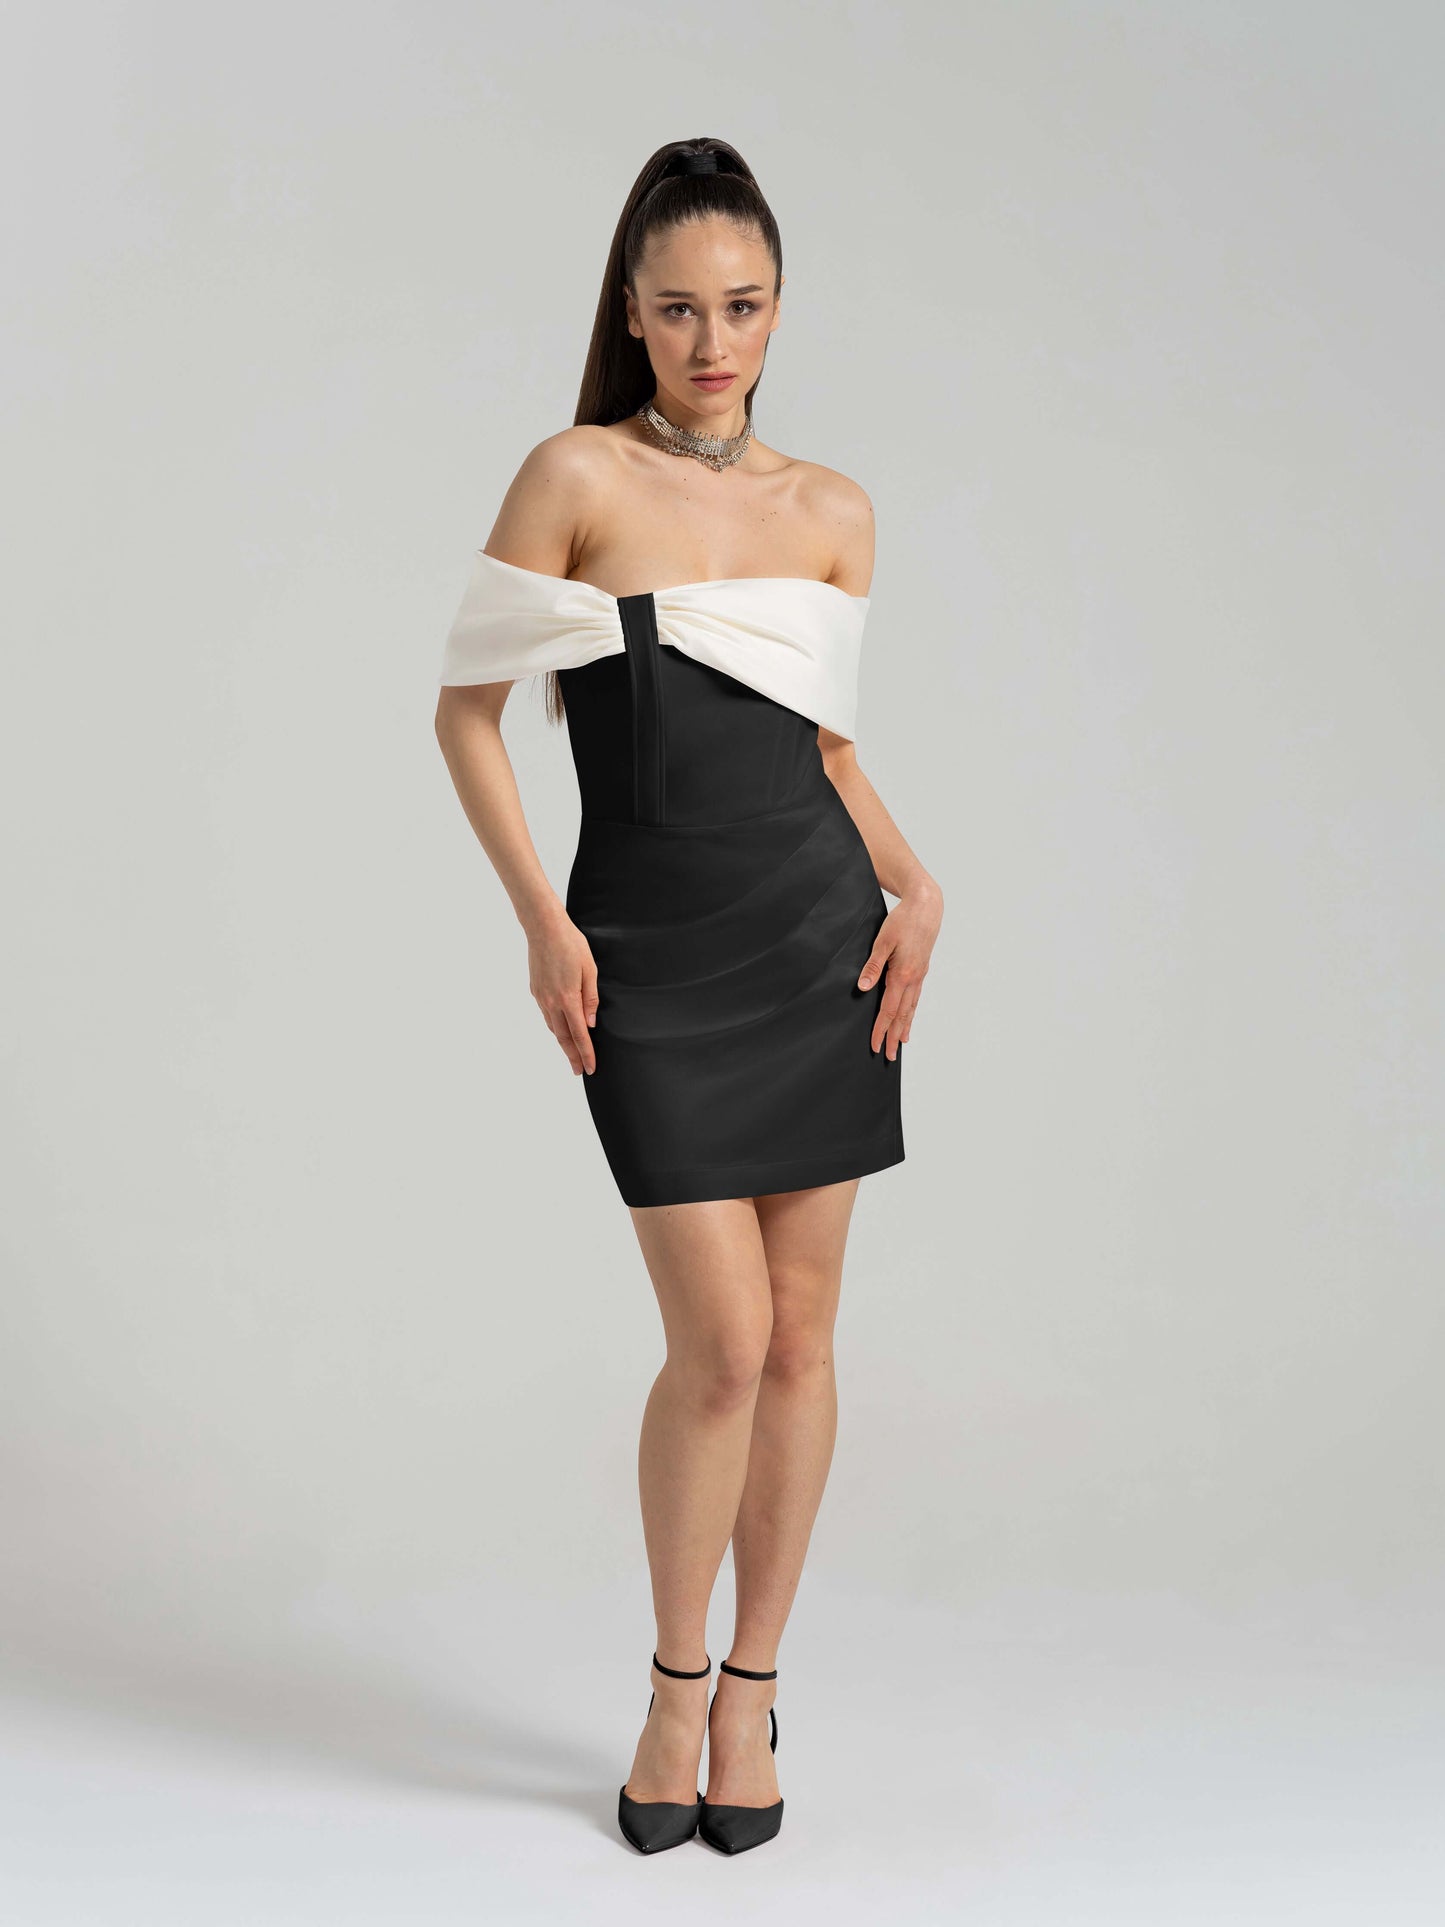 Signature of the Sun Mini Dress - Black & White by Tia Dorraine Women's Luxury Fashion Designer Clothing Brand